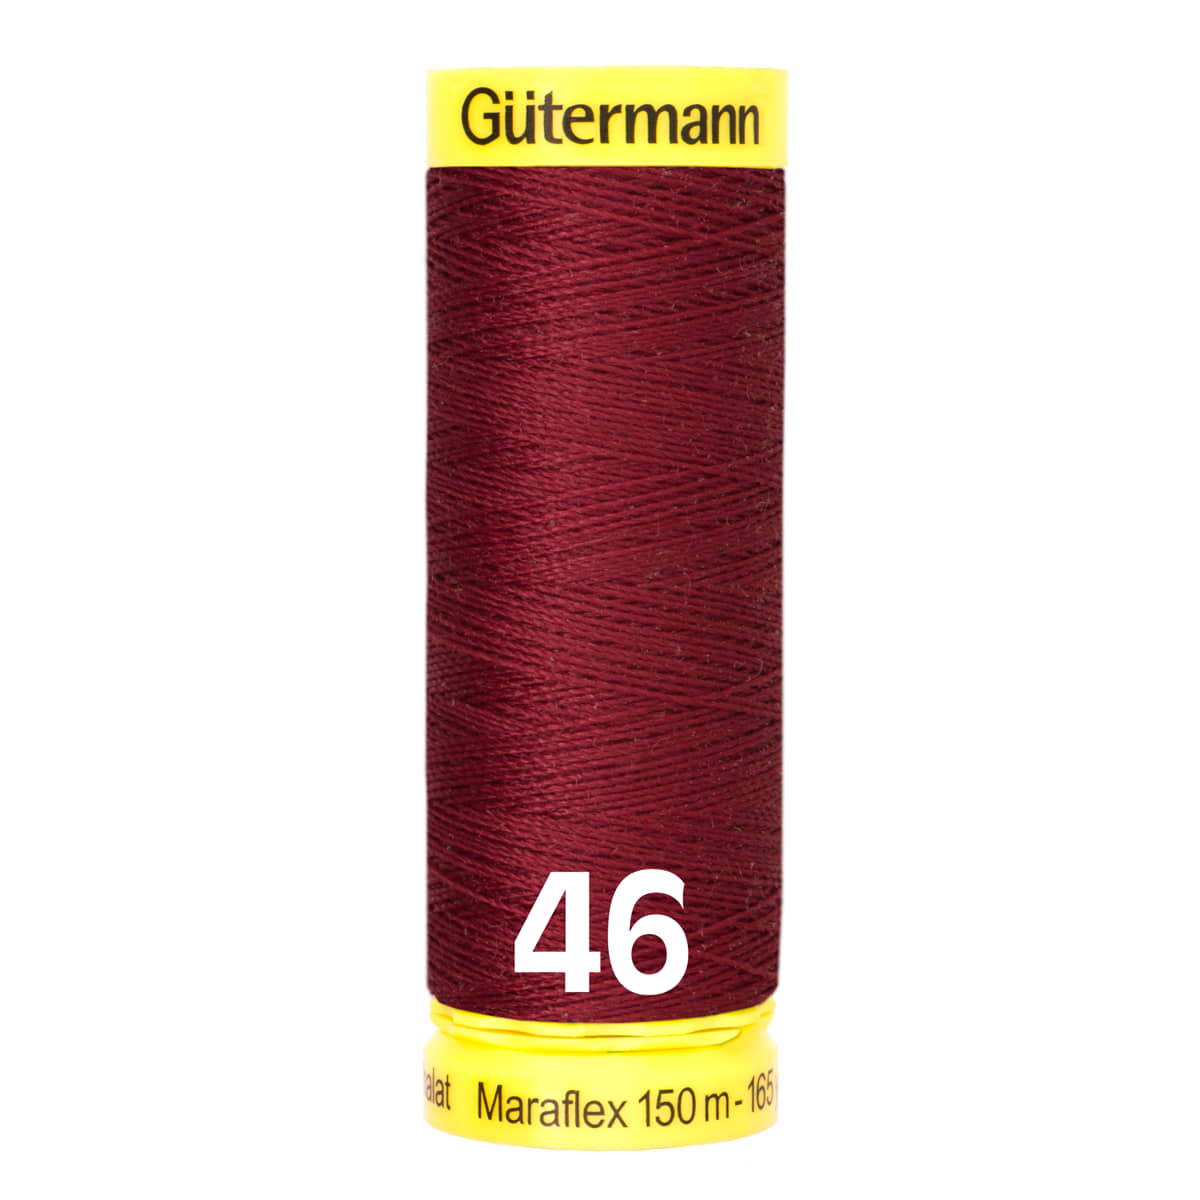 Gütermann MaraFlex 150m - 46 donker rood GUTERMANN-MARAFLEX-150-46 4029394998645 - Fourniturenkraam.nl